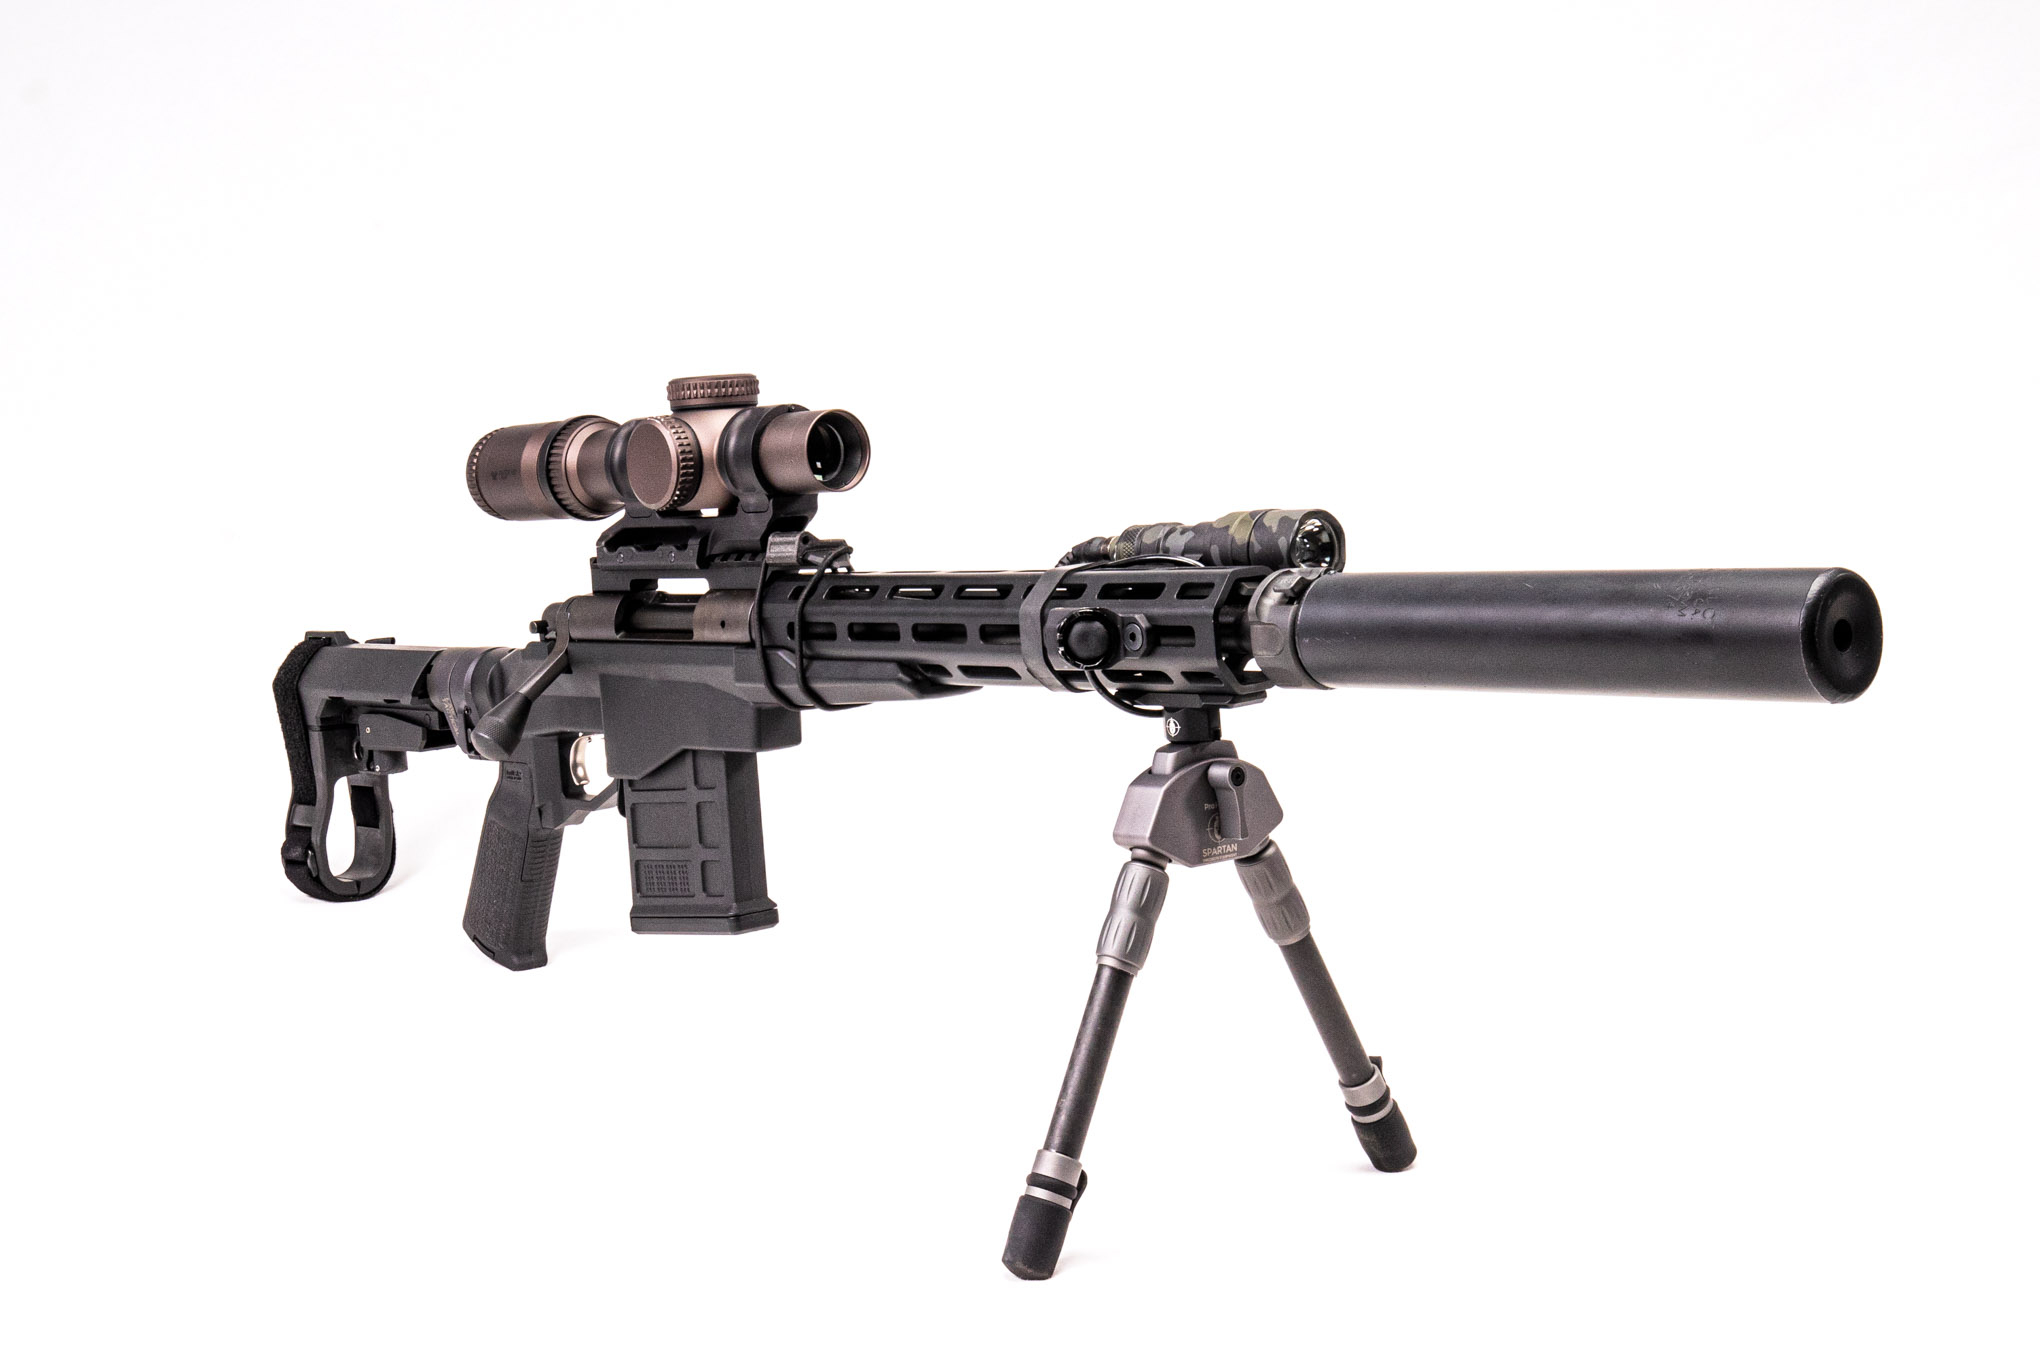 remington m700 sniper rifle